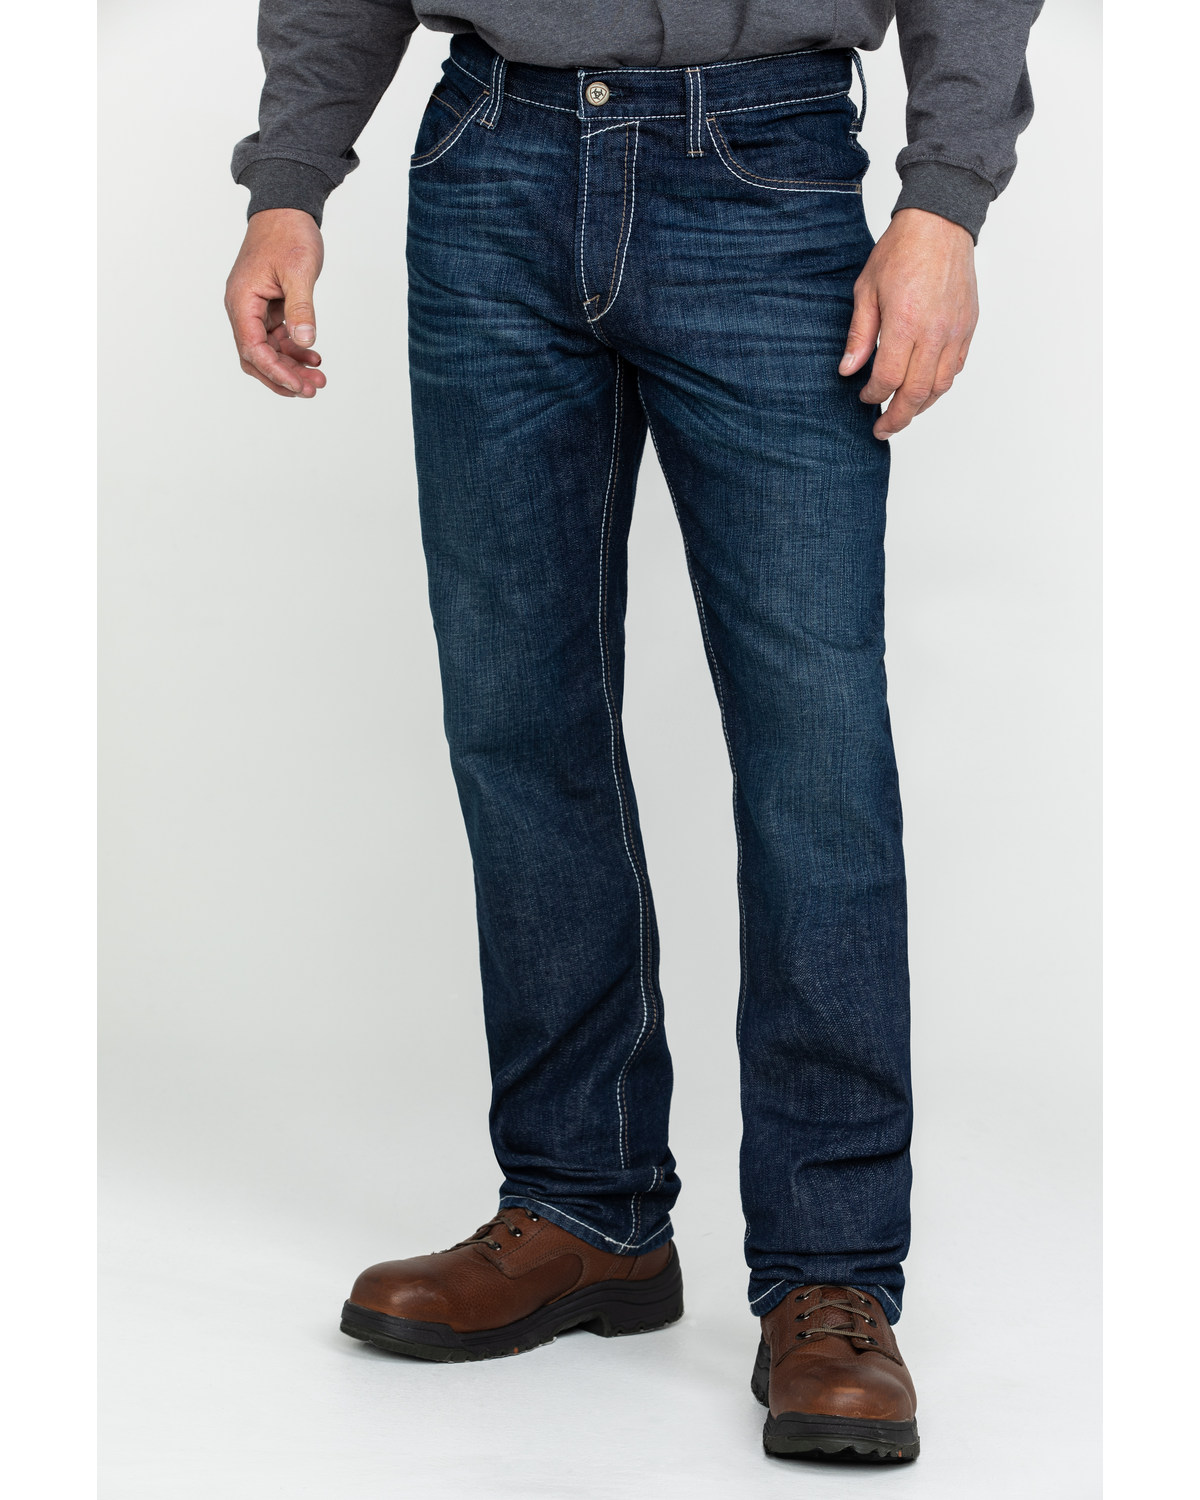 Ariat Men's FR M4 Durastretch Lineup Straight Work Jeans | Boot Barn